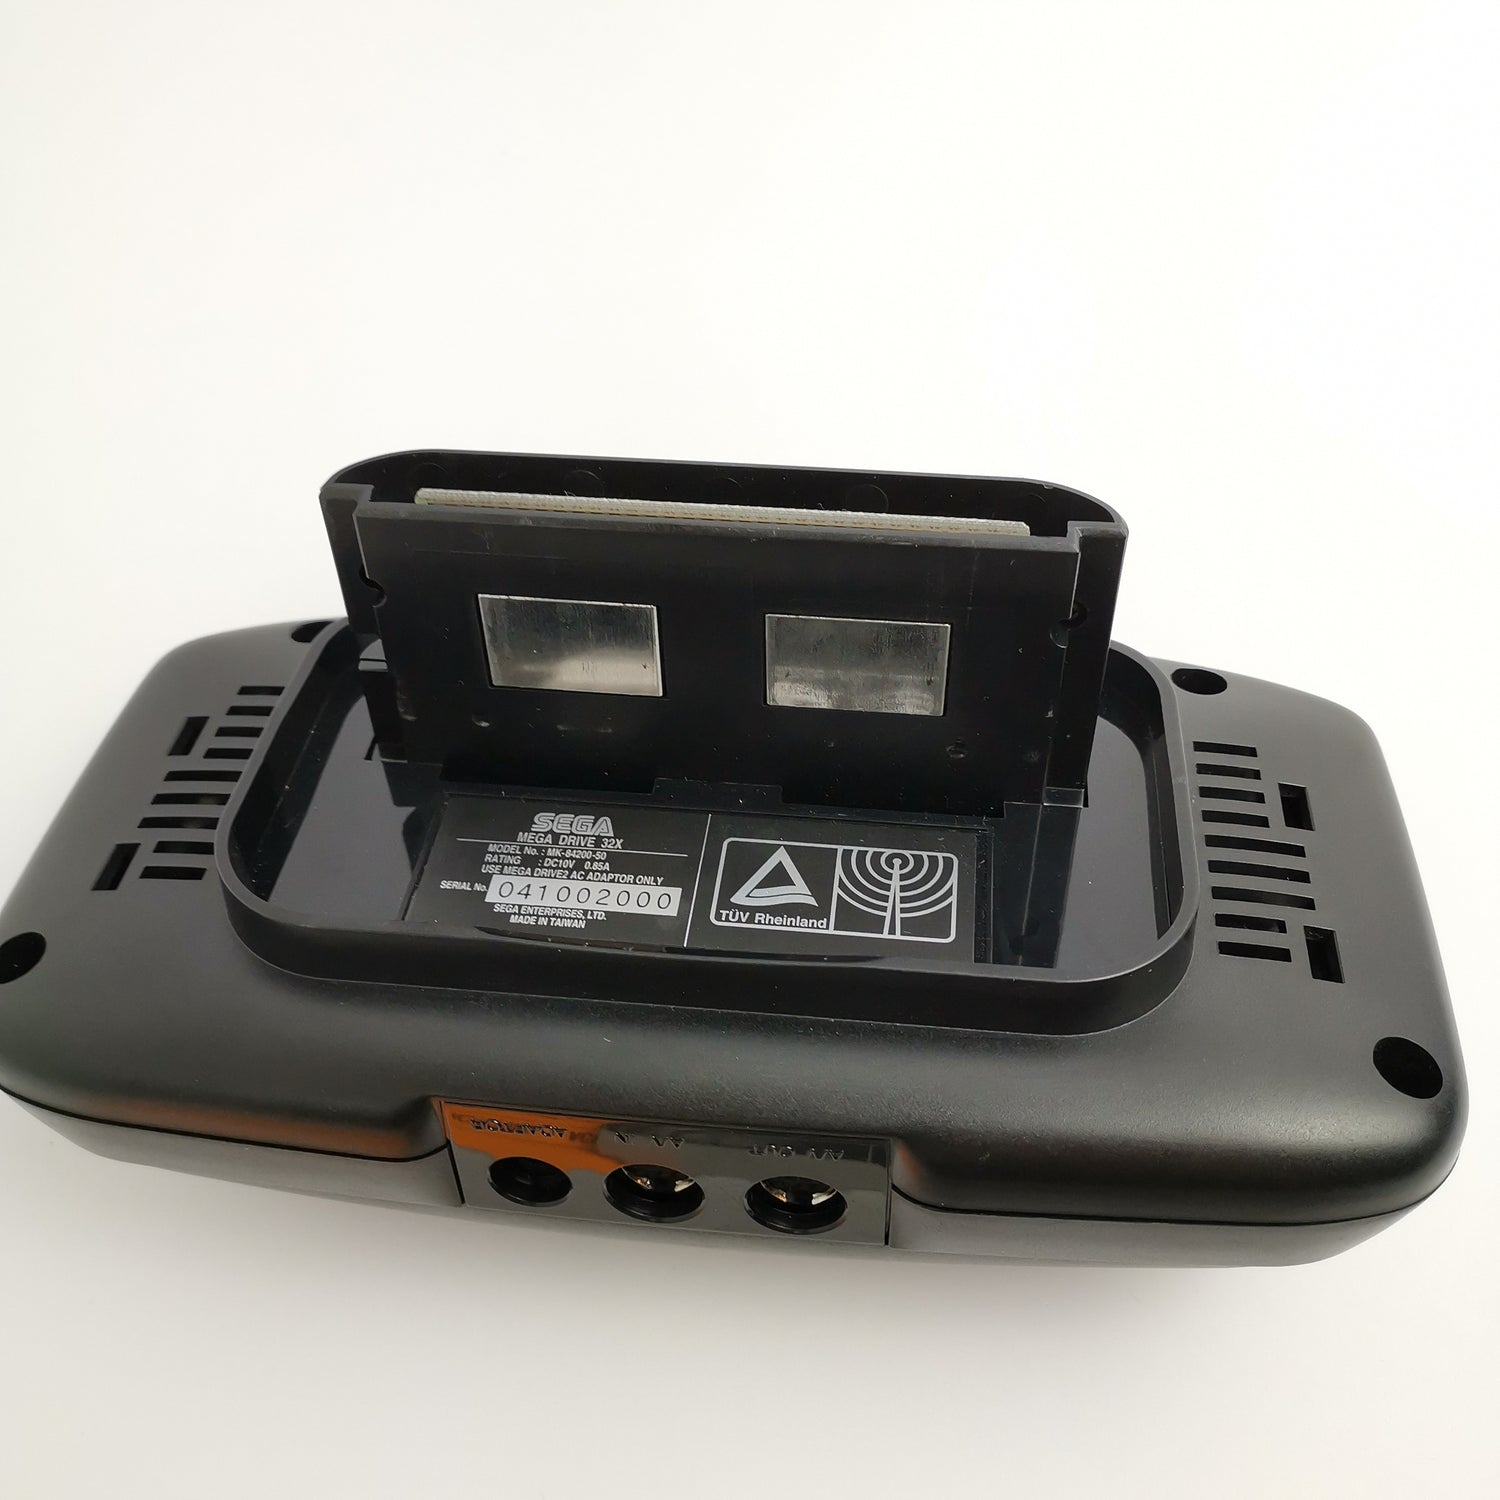 Sega Mega Drive Zubehör : MegaDrive 32X Adapter | Erweiterung PAL [2]